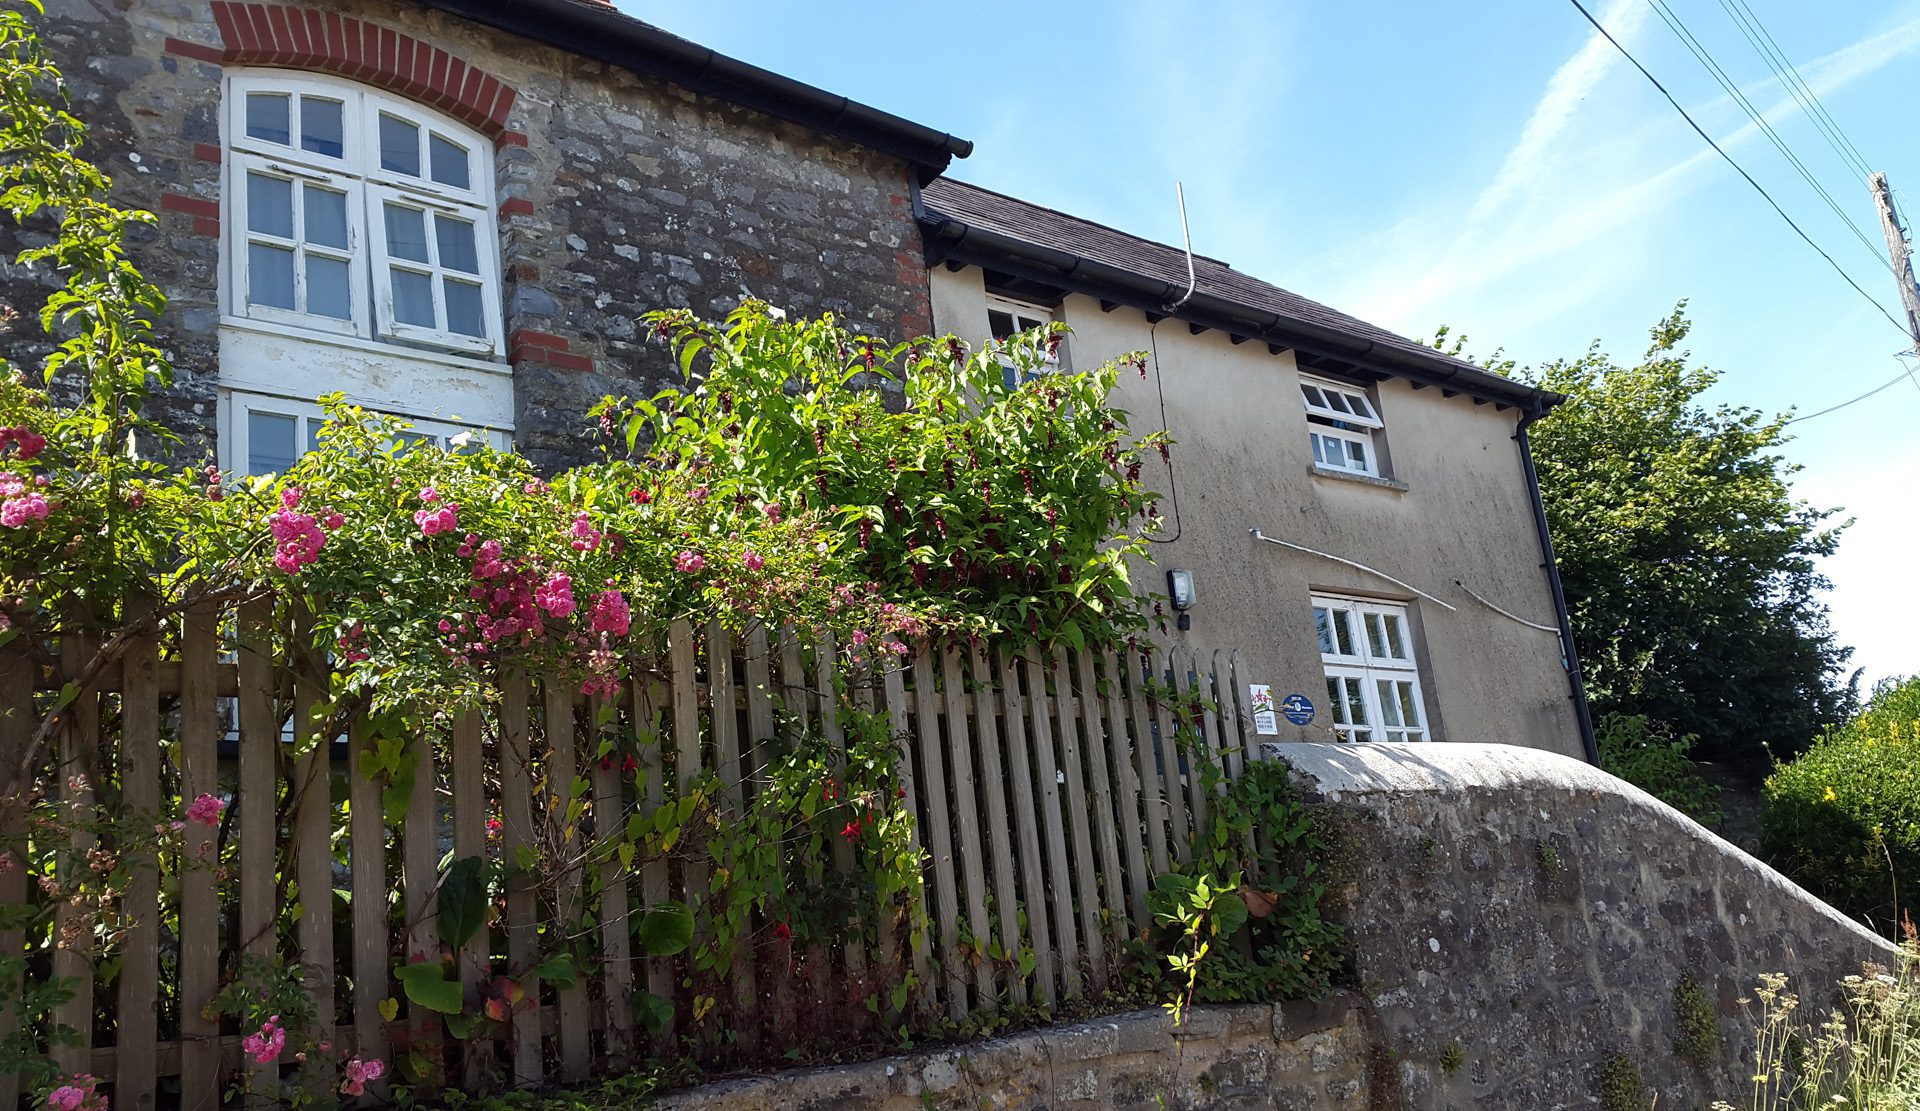 Lawrenny Millennium Hostel is a beautiful village hall in Pembrokeshire